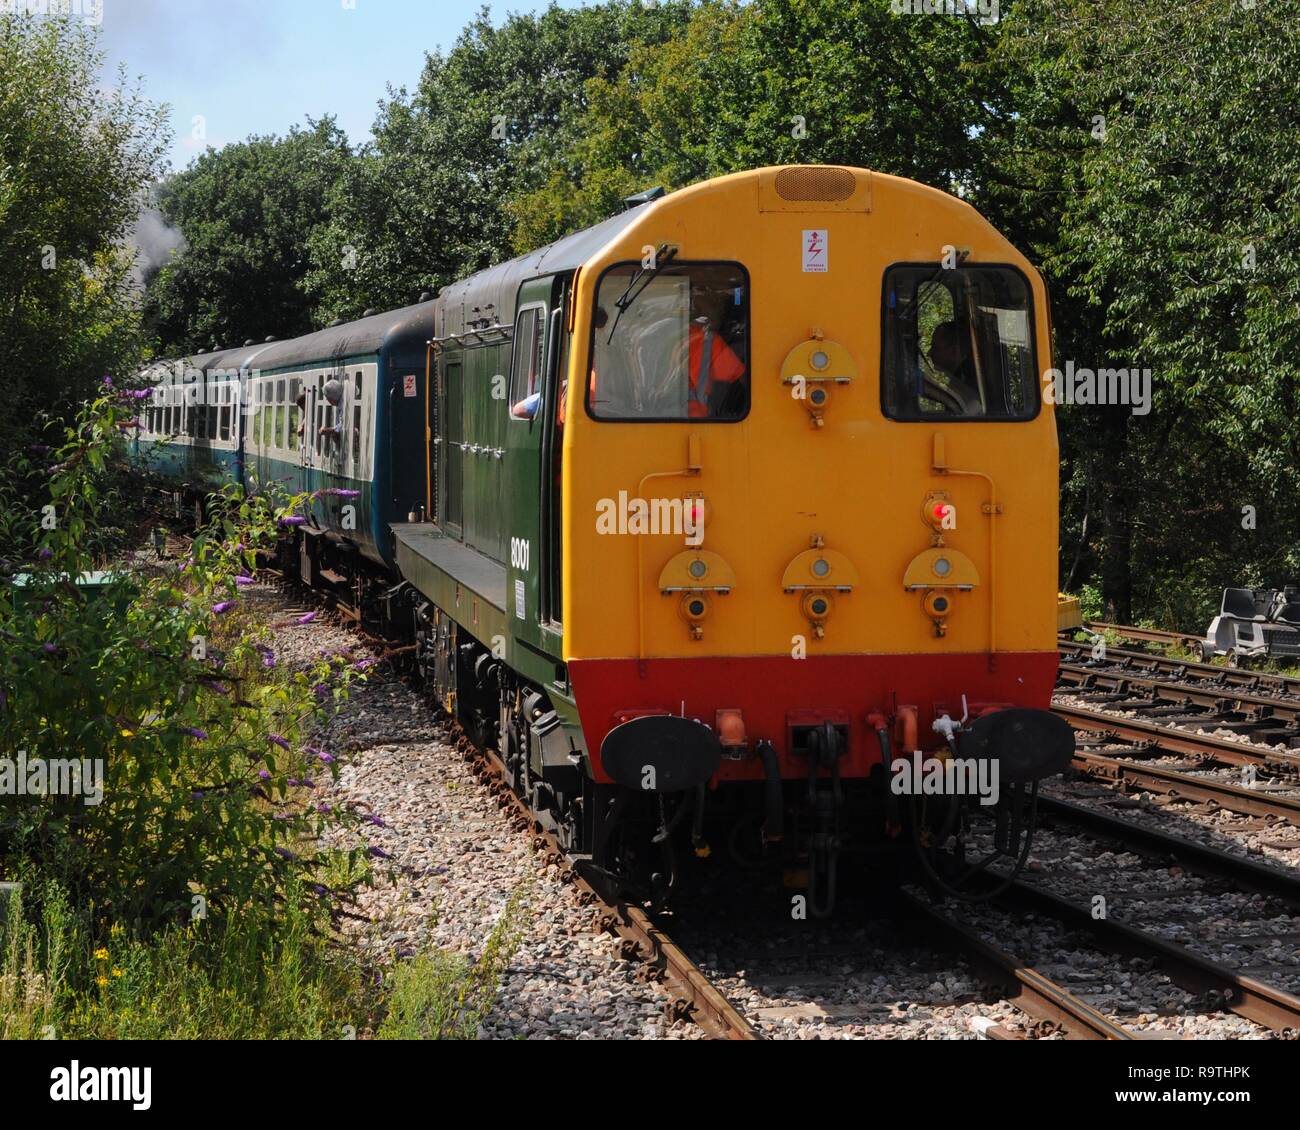 British Railways Class 20 diesel-electric locomotive D8001 leaving North Weald Station, Epping Ongar Railway, Essex, UK. Stock Photo